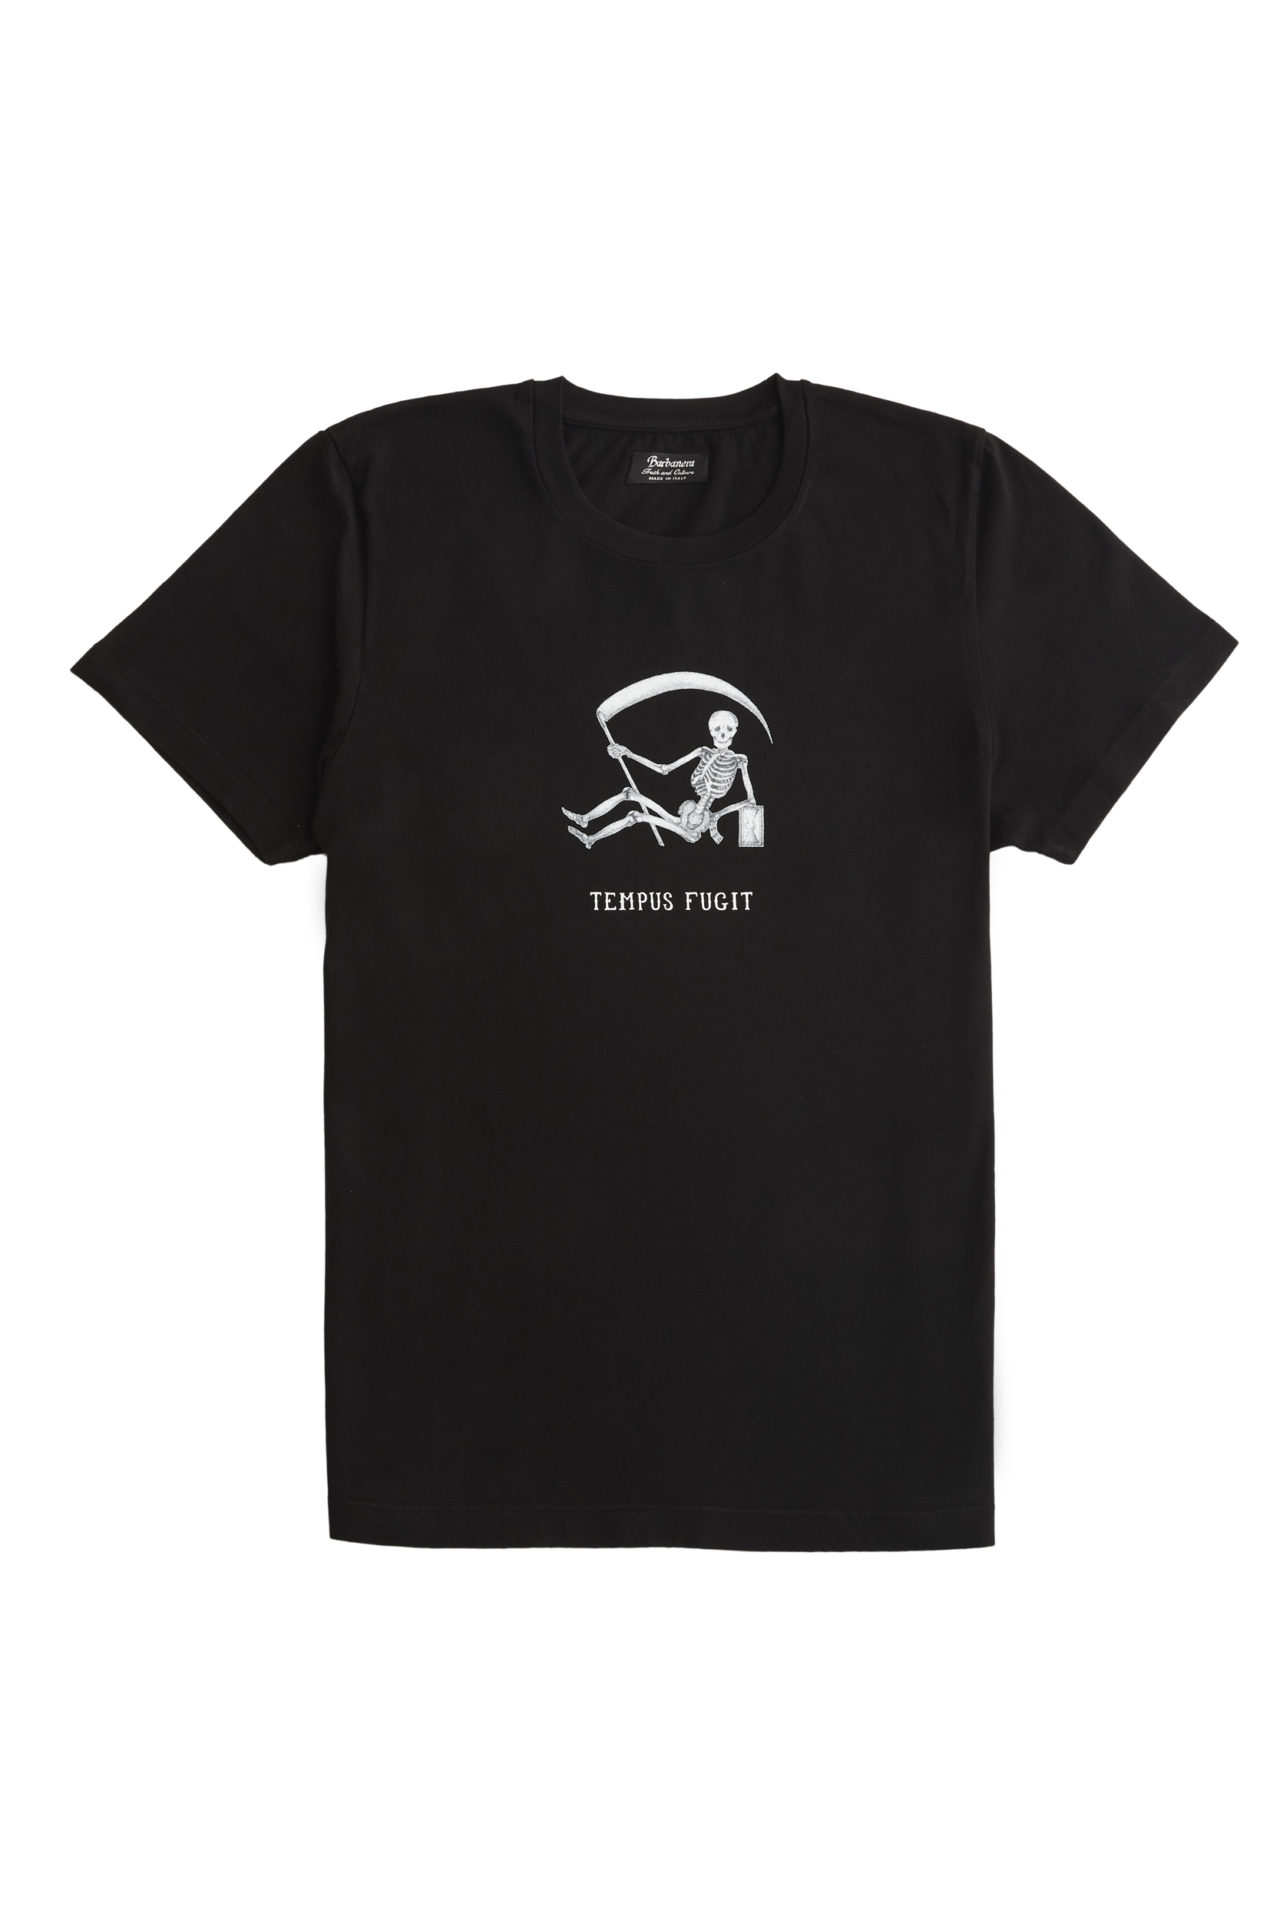 Tempus Fugit Black Raw Cotton T-Shirt - Barbanera